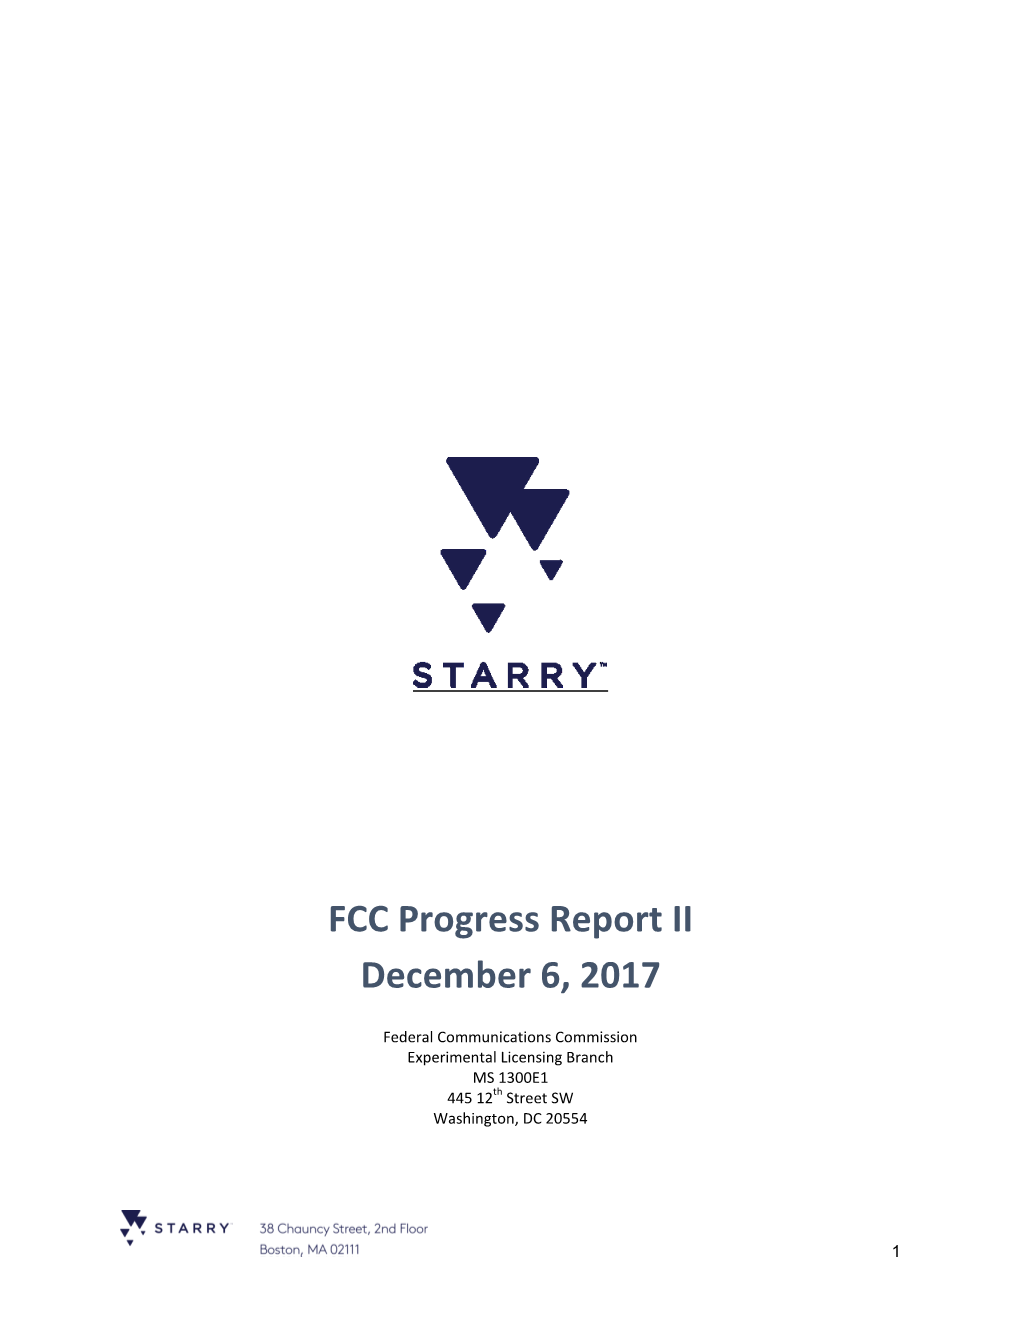 FCC Progress Report II December 6, 2017